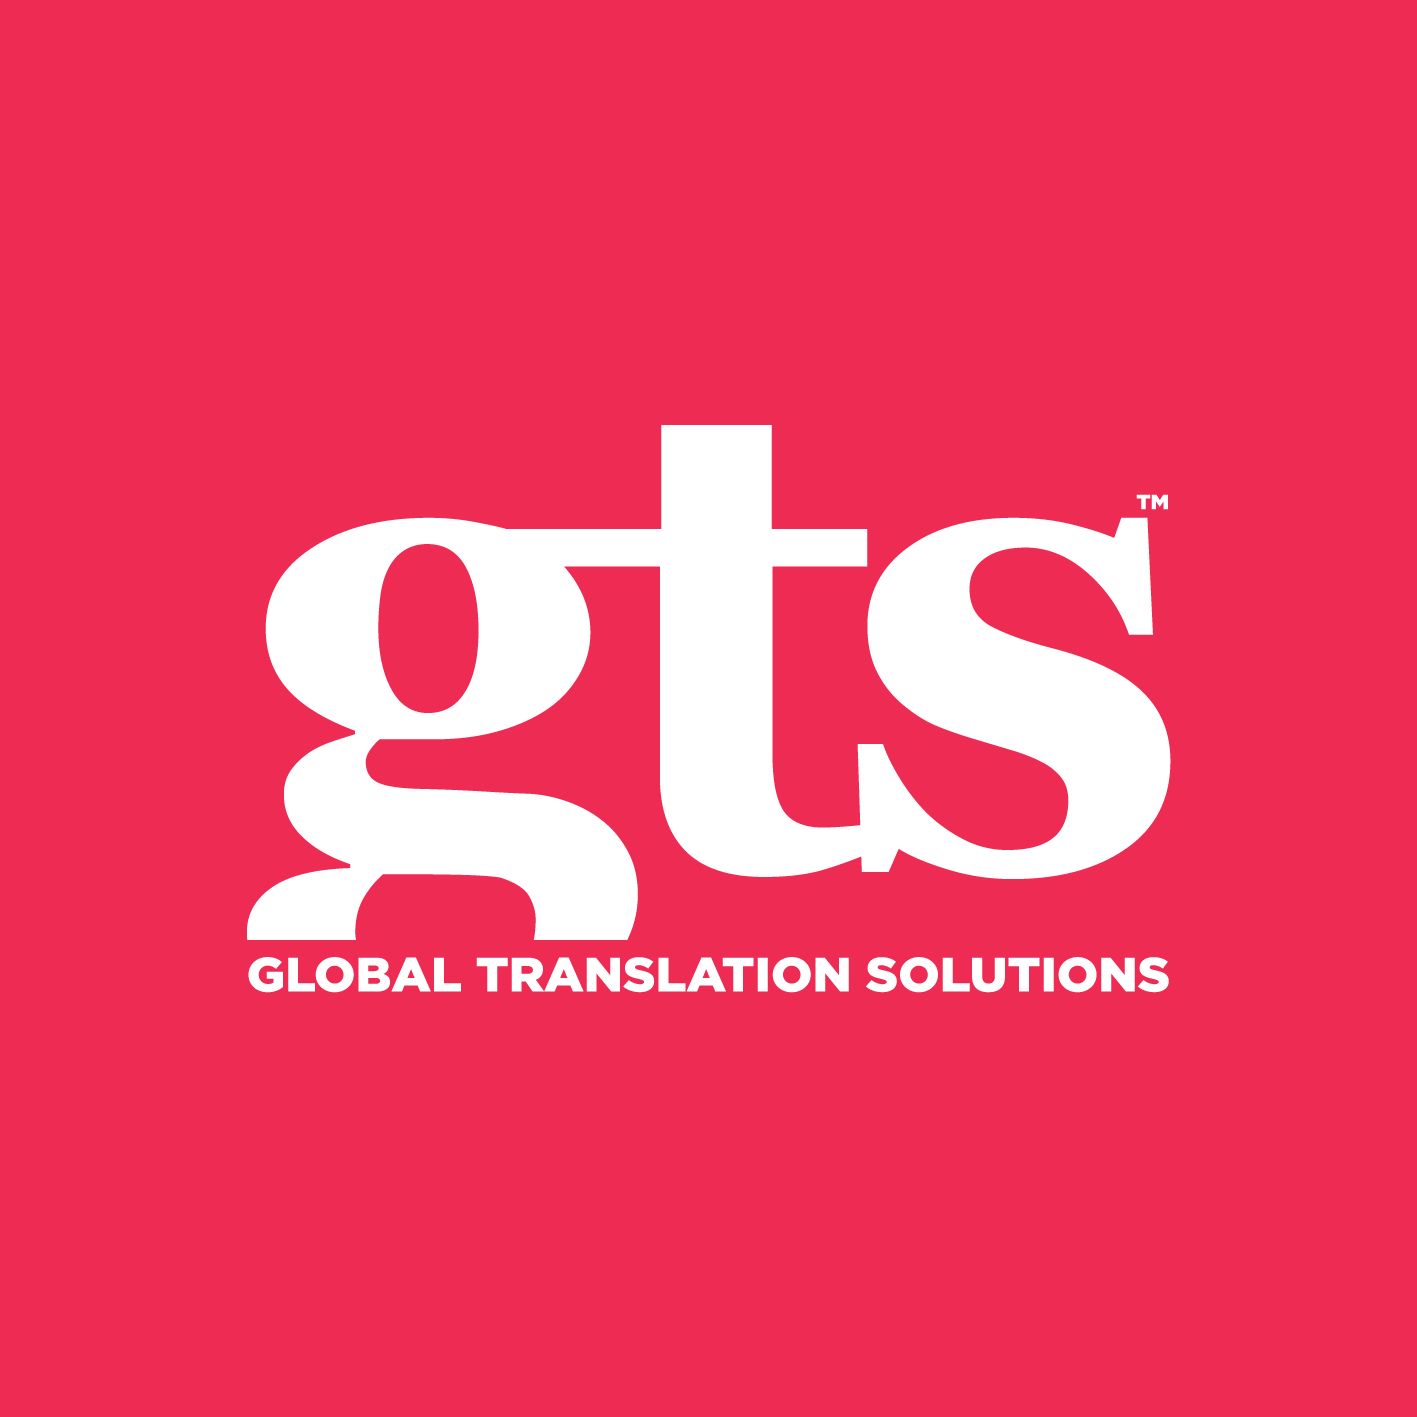 Global Translation Solutions